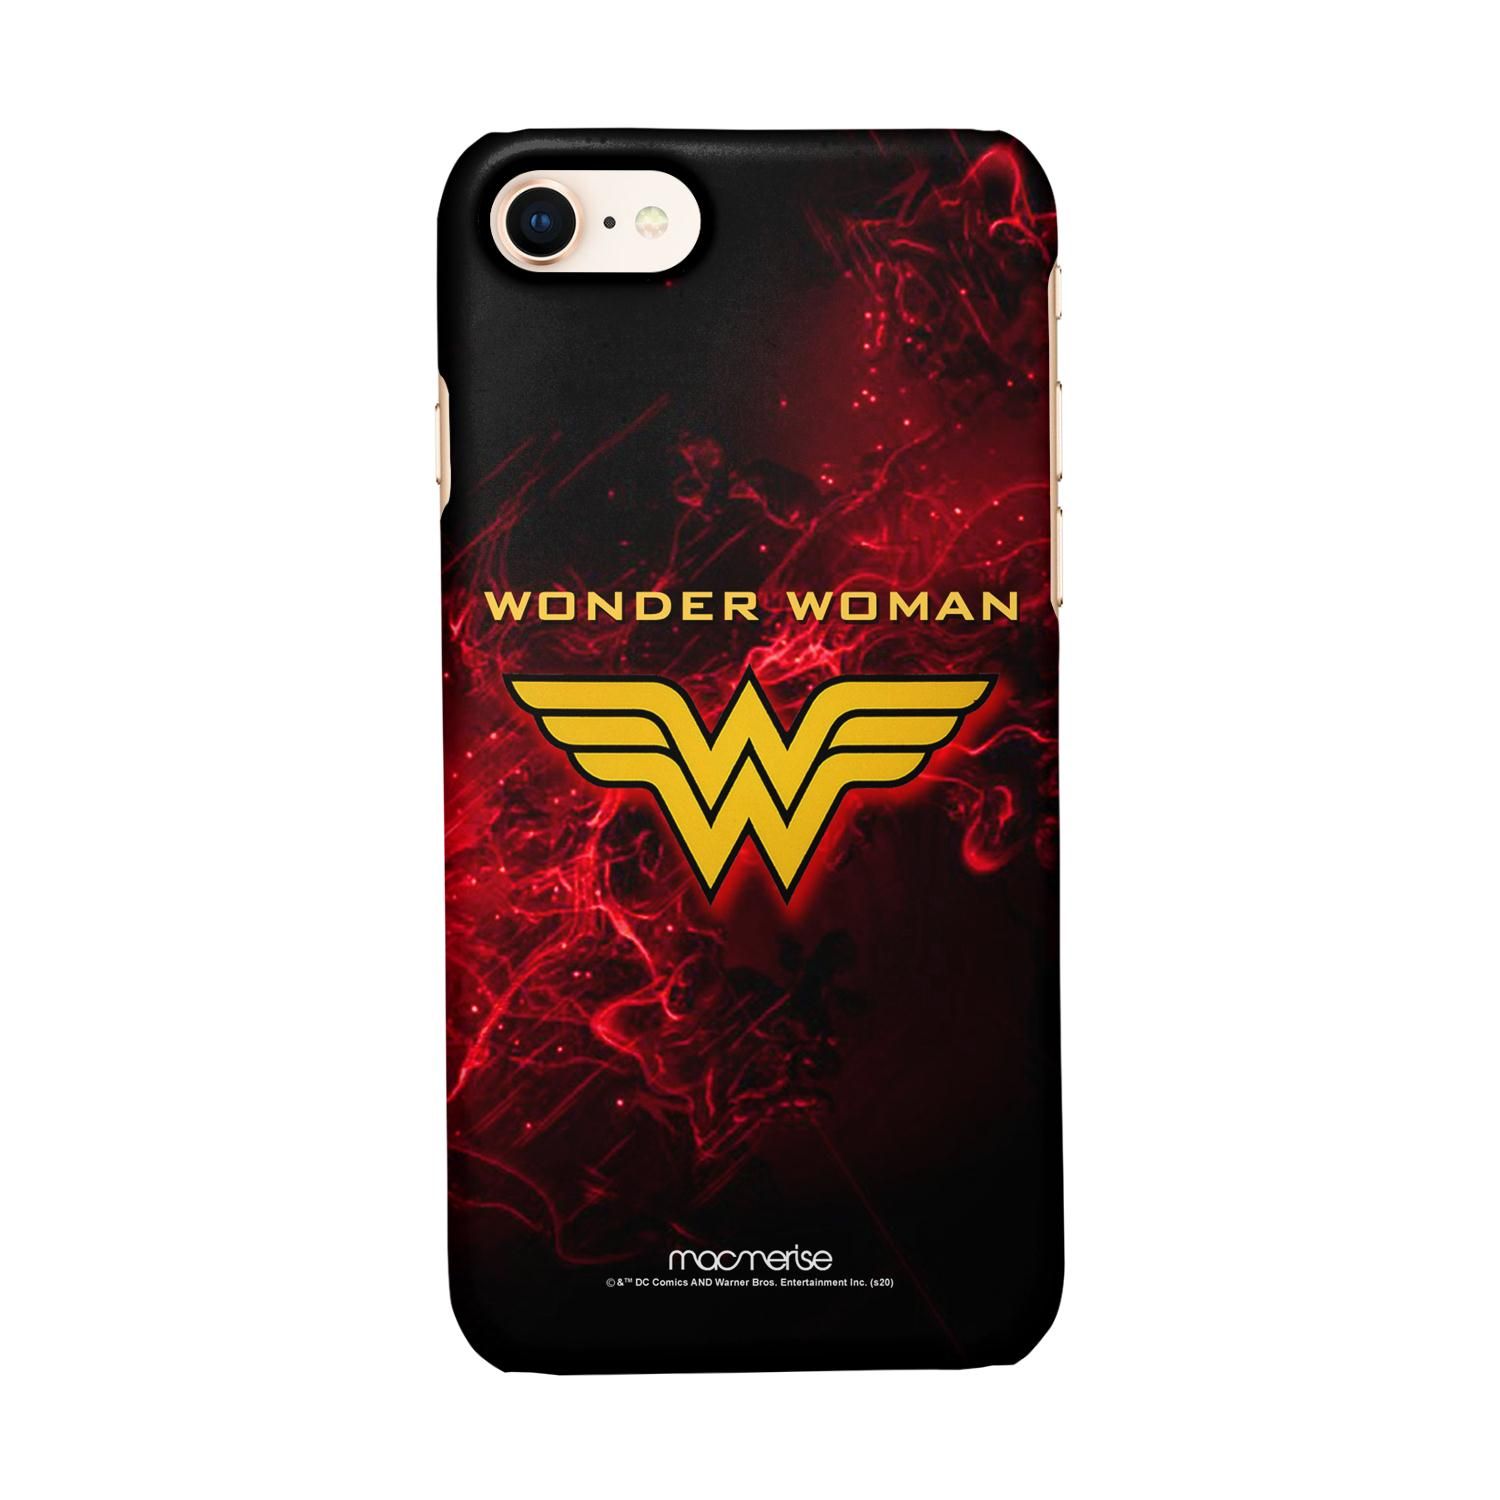 Buy Emblem Wonder Woman - Sleek Phone Case for iPhone 7 Online